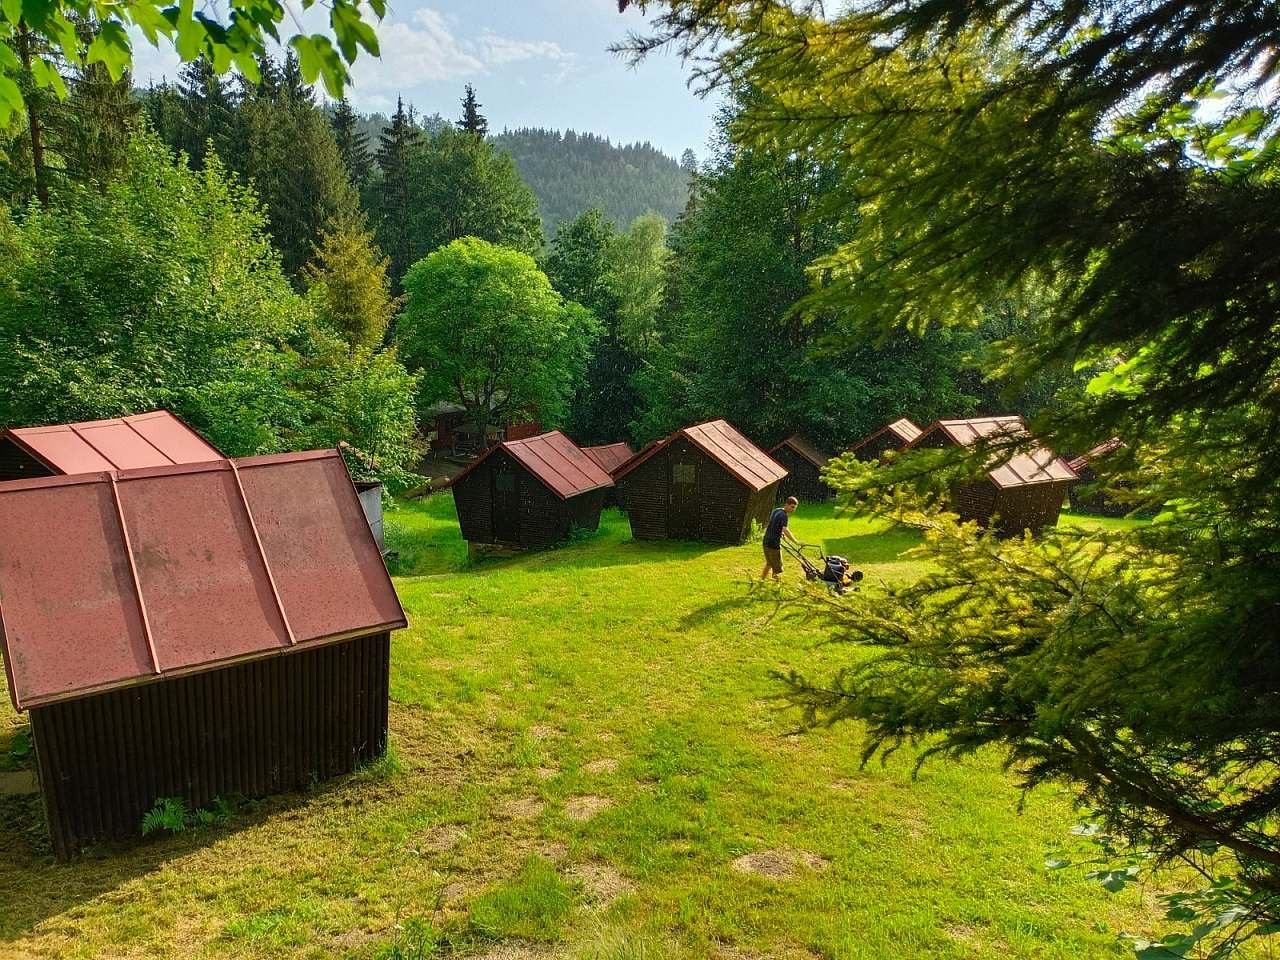 Complexo de acampamento - cabanas